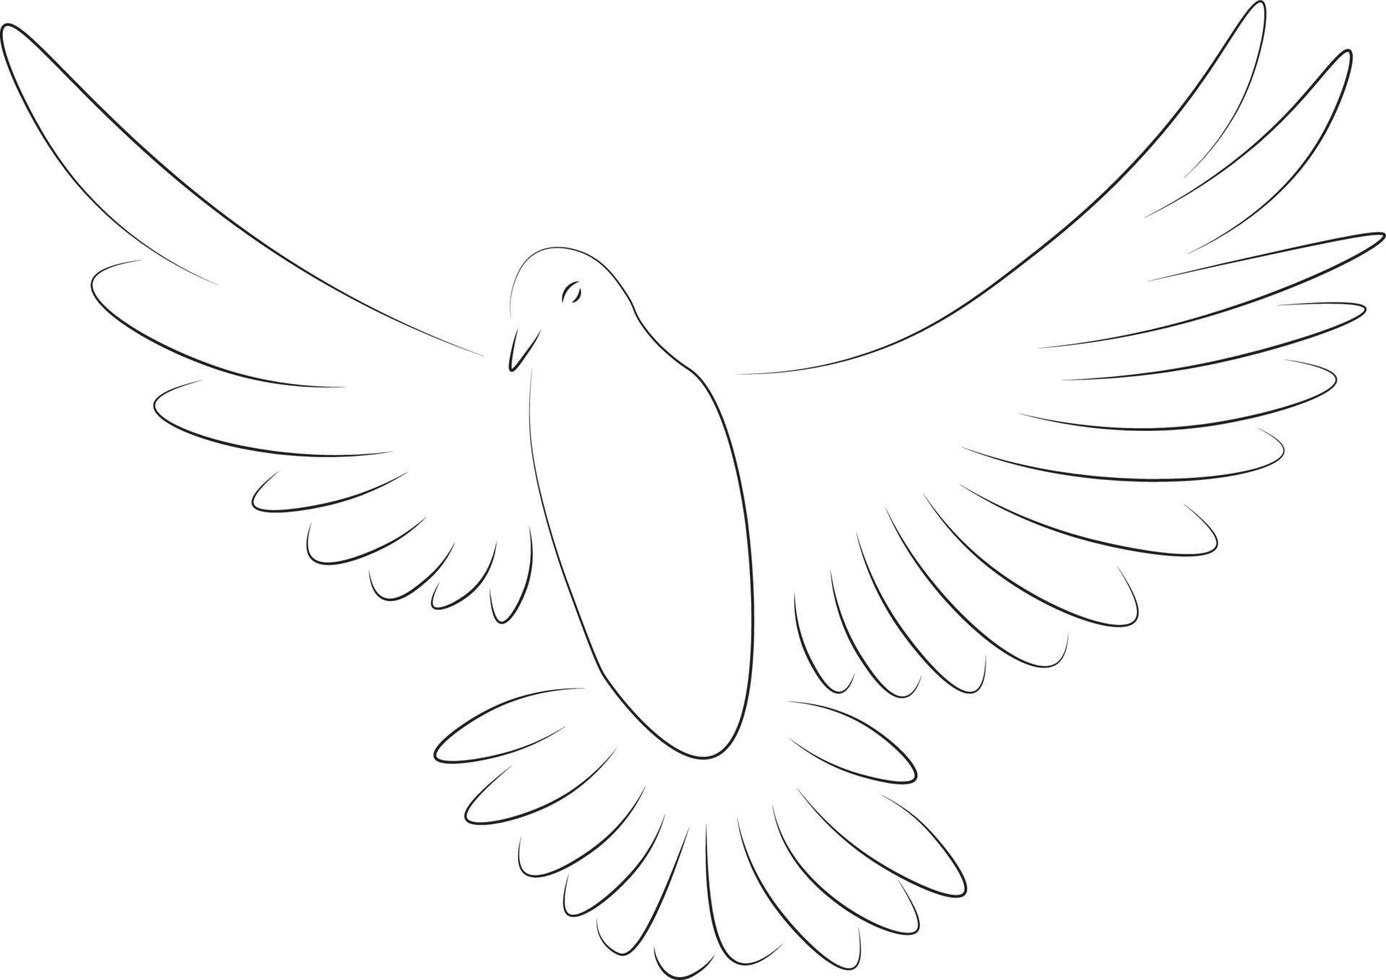 Contour drawn pigeon bird in minimalist style vector illustration